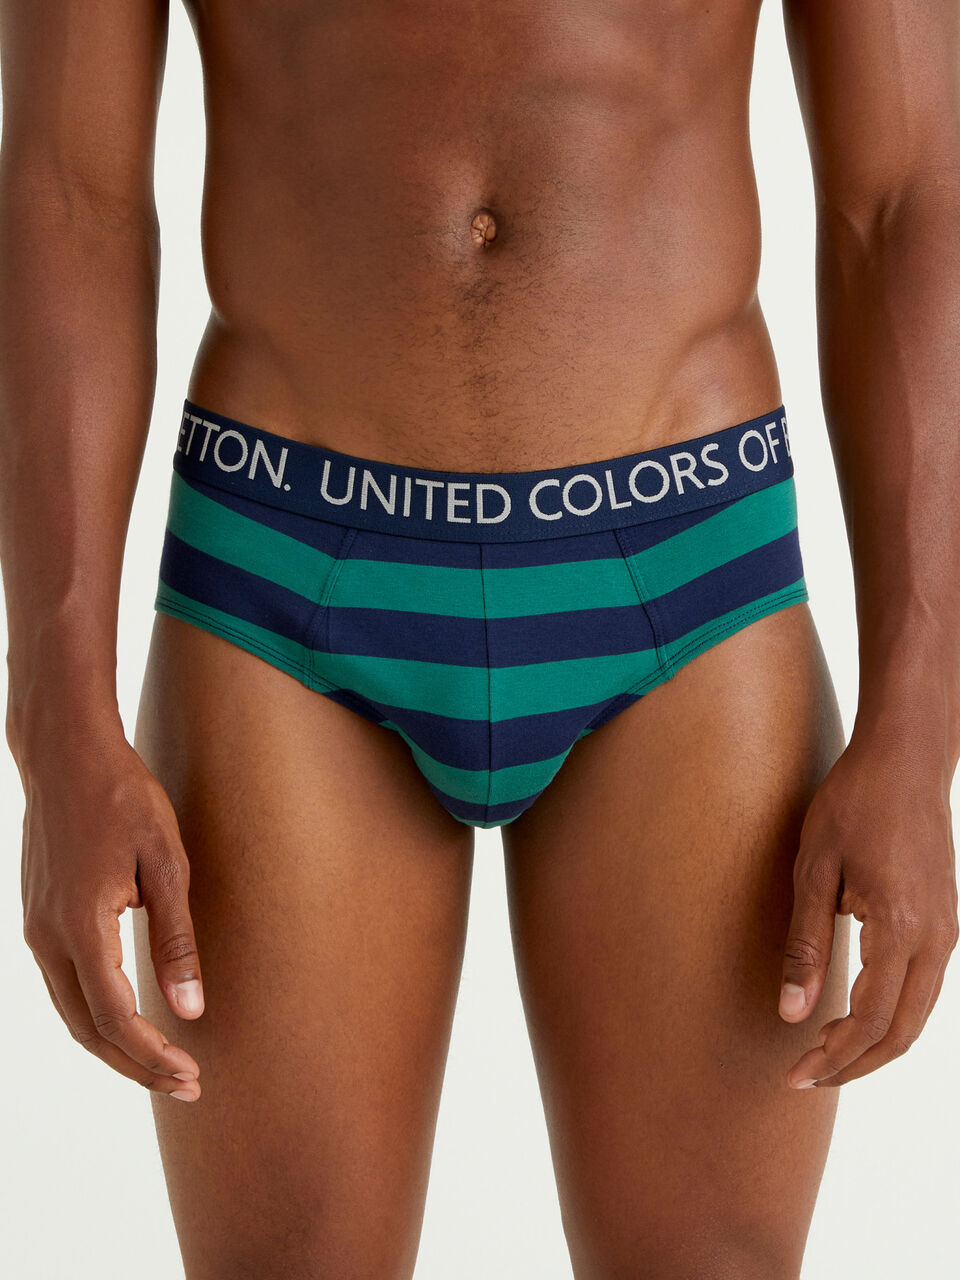 United Colors of Benetton Men's Underwear, Green 902, XL, Green